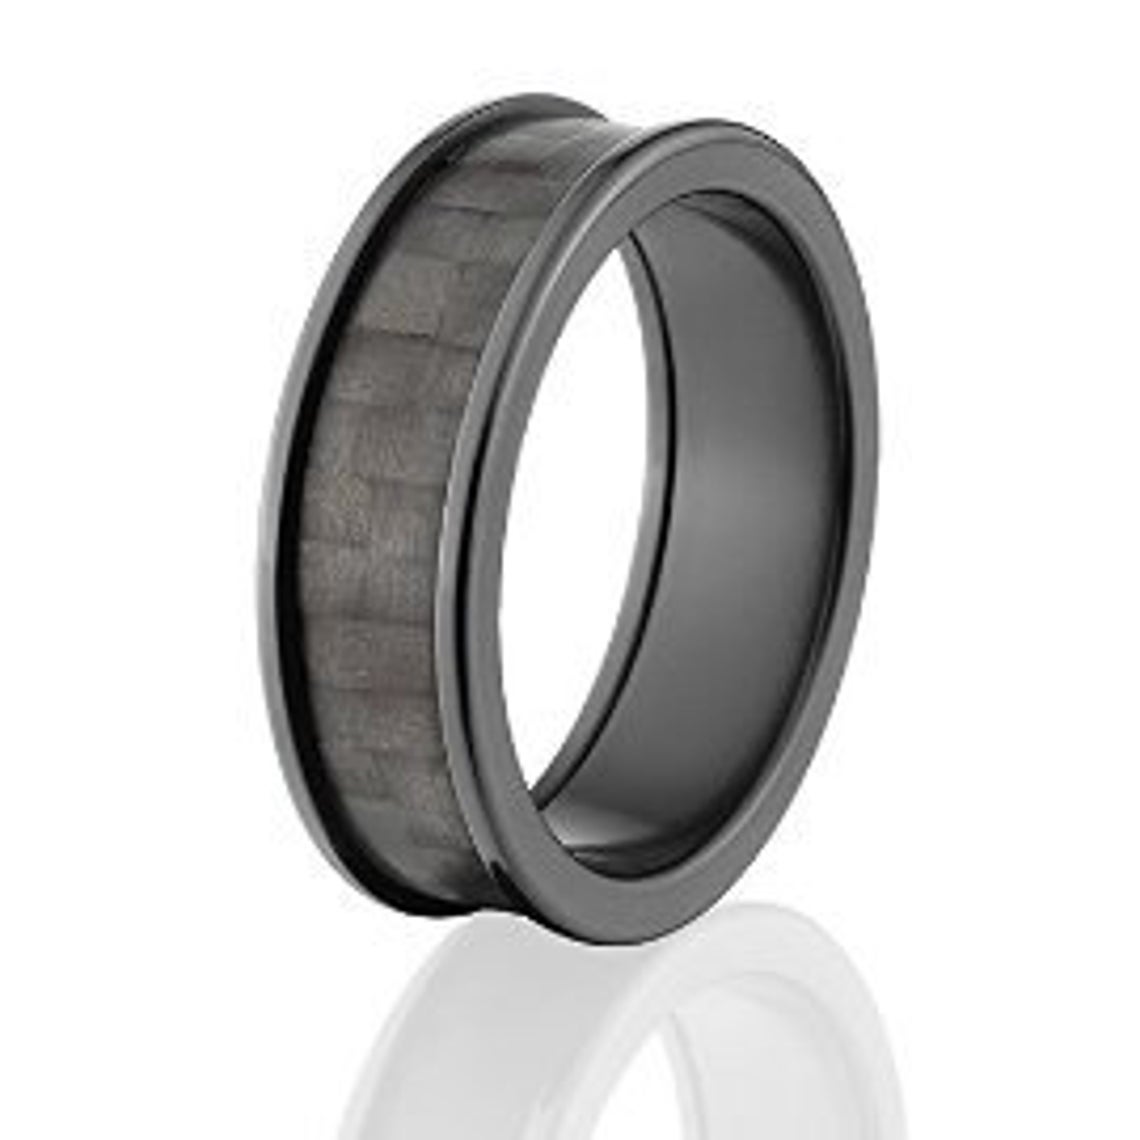 7mm wide black carbon fiber ring with black zirconium edges